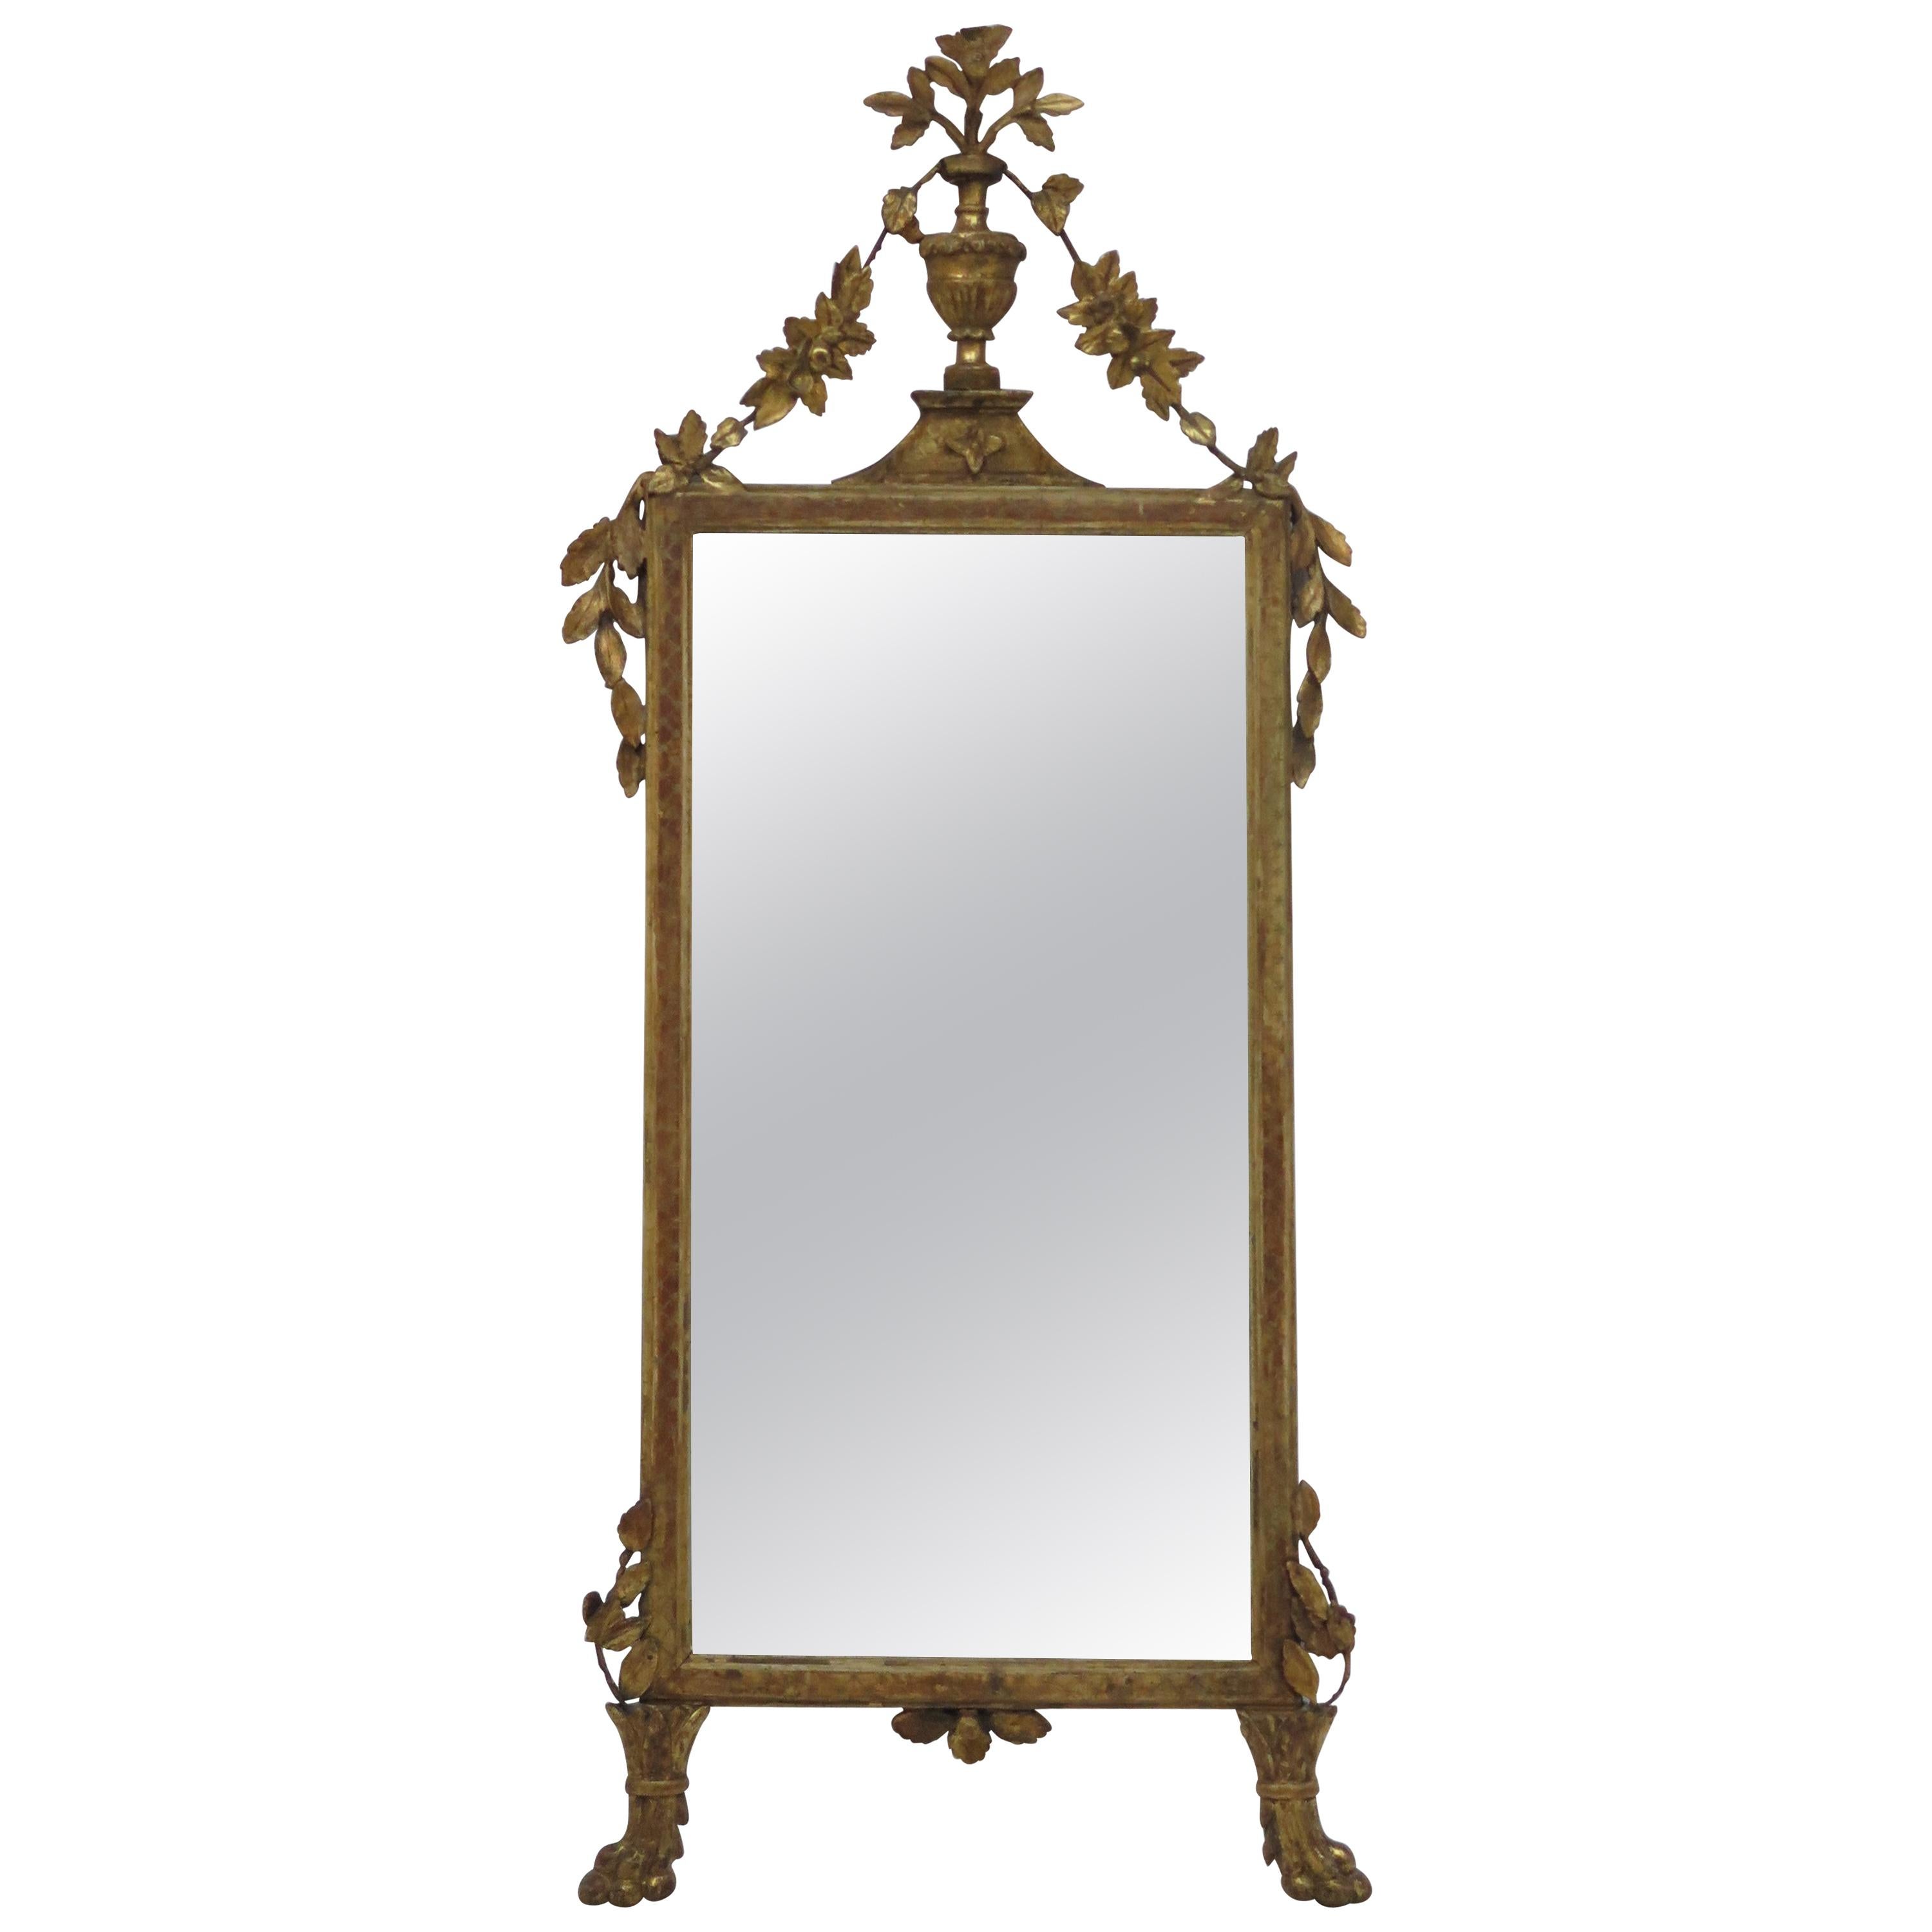 A Italian Neoclassic Giltwood Mirror